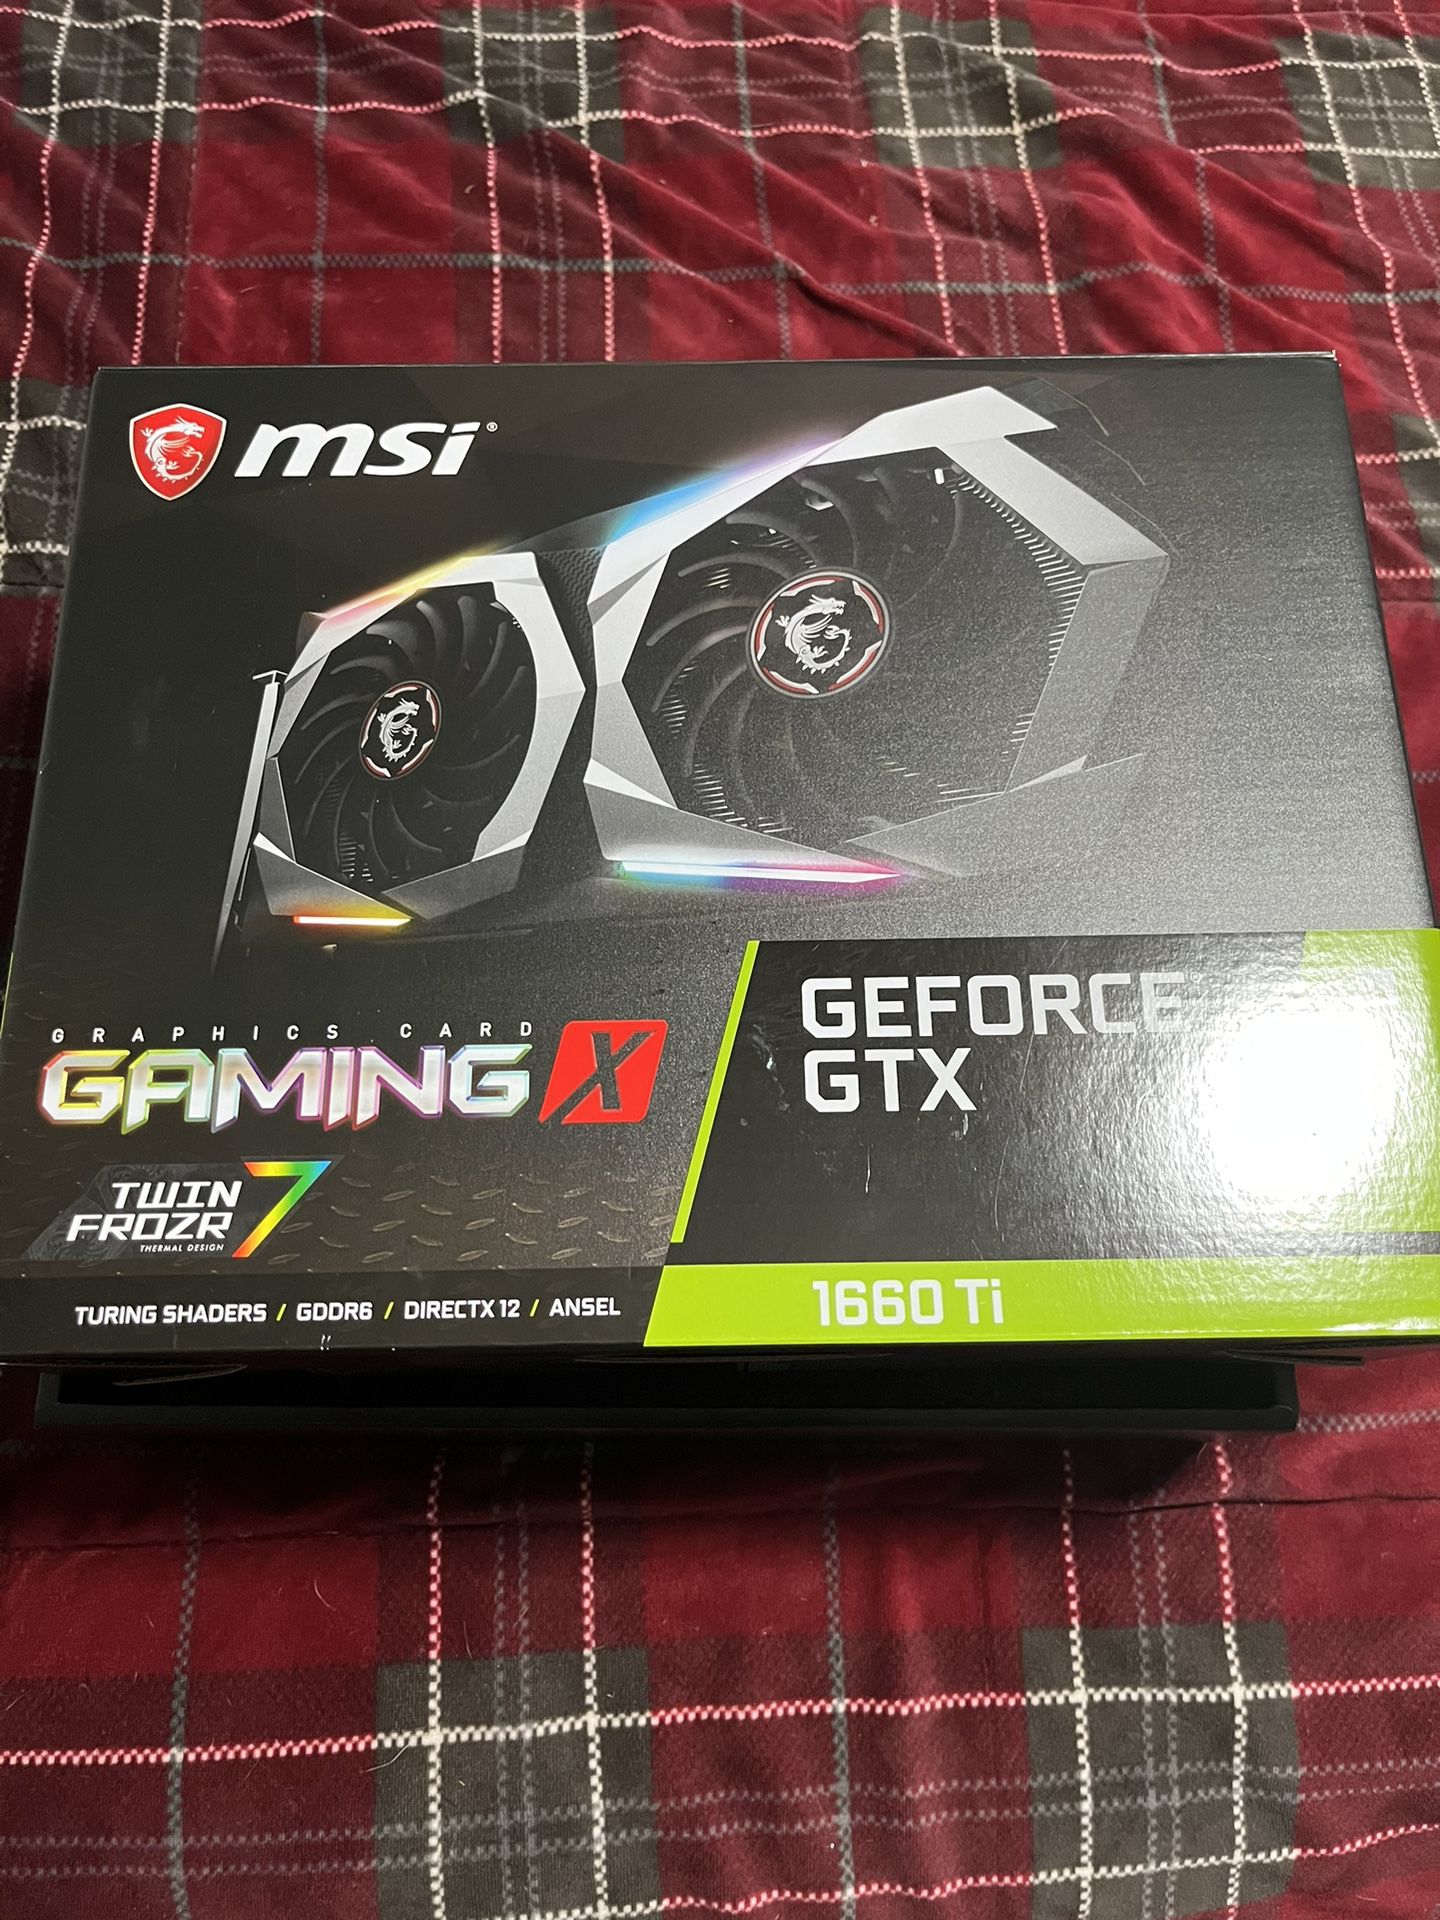 MSI GeForce GXT 1600 Ti Gaming Card